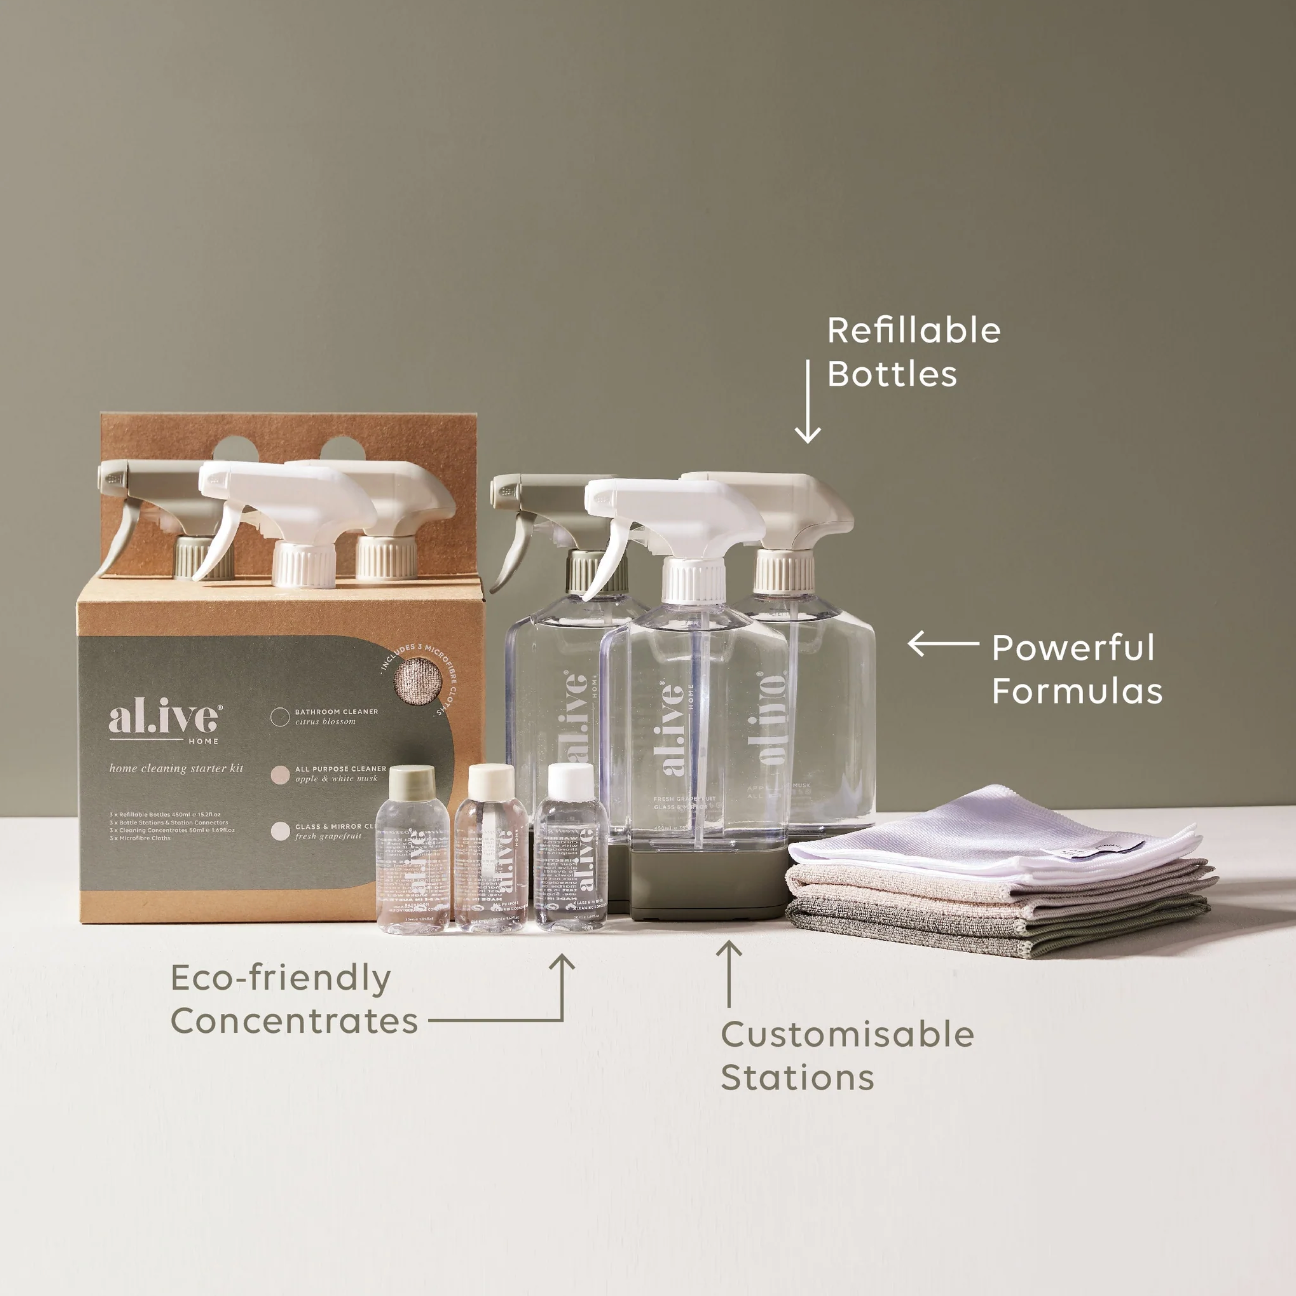 Al.ive - Home Cleaning Starter Kit